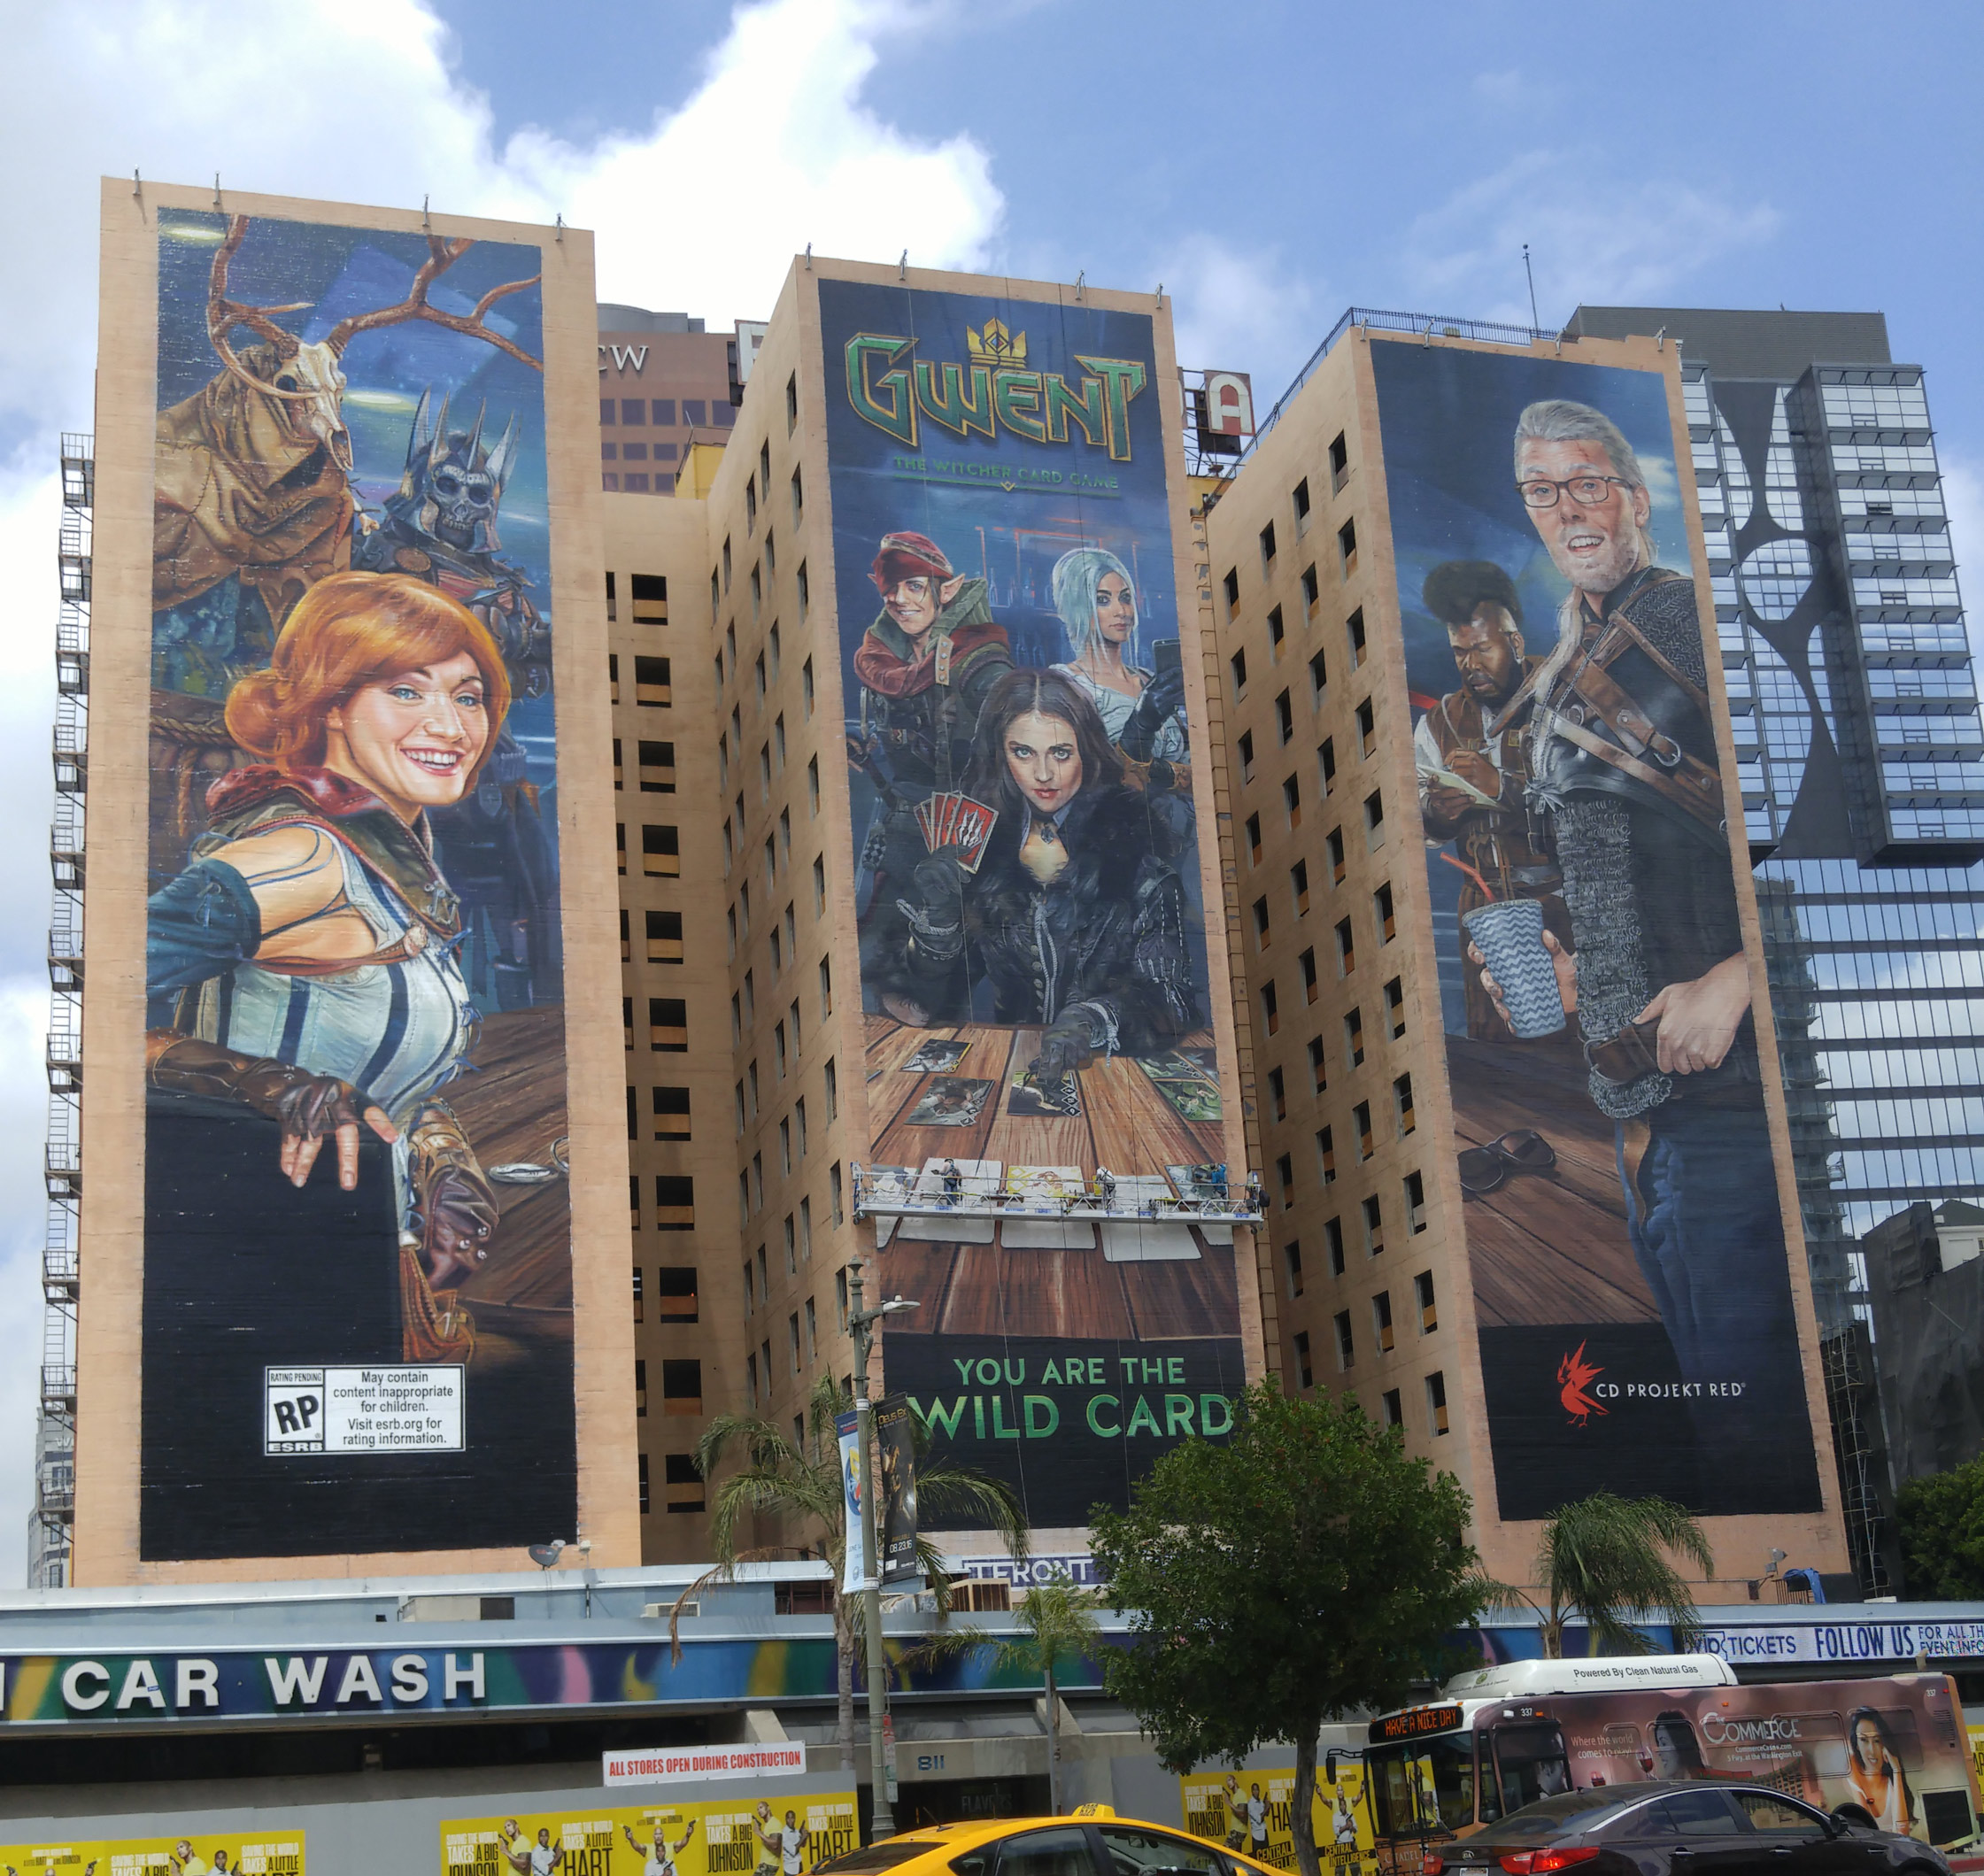 Gwent E3 2016 building mural